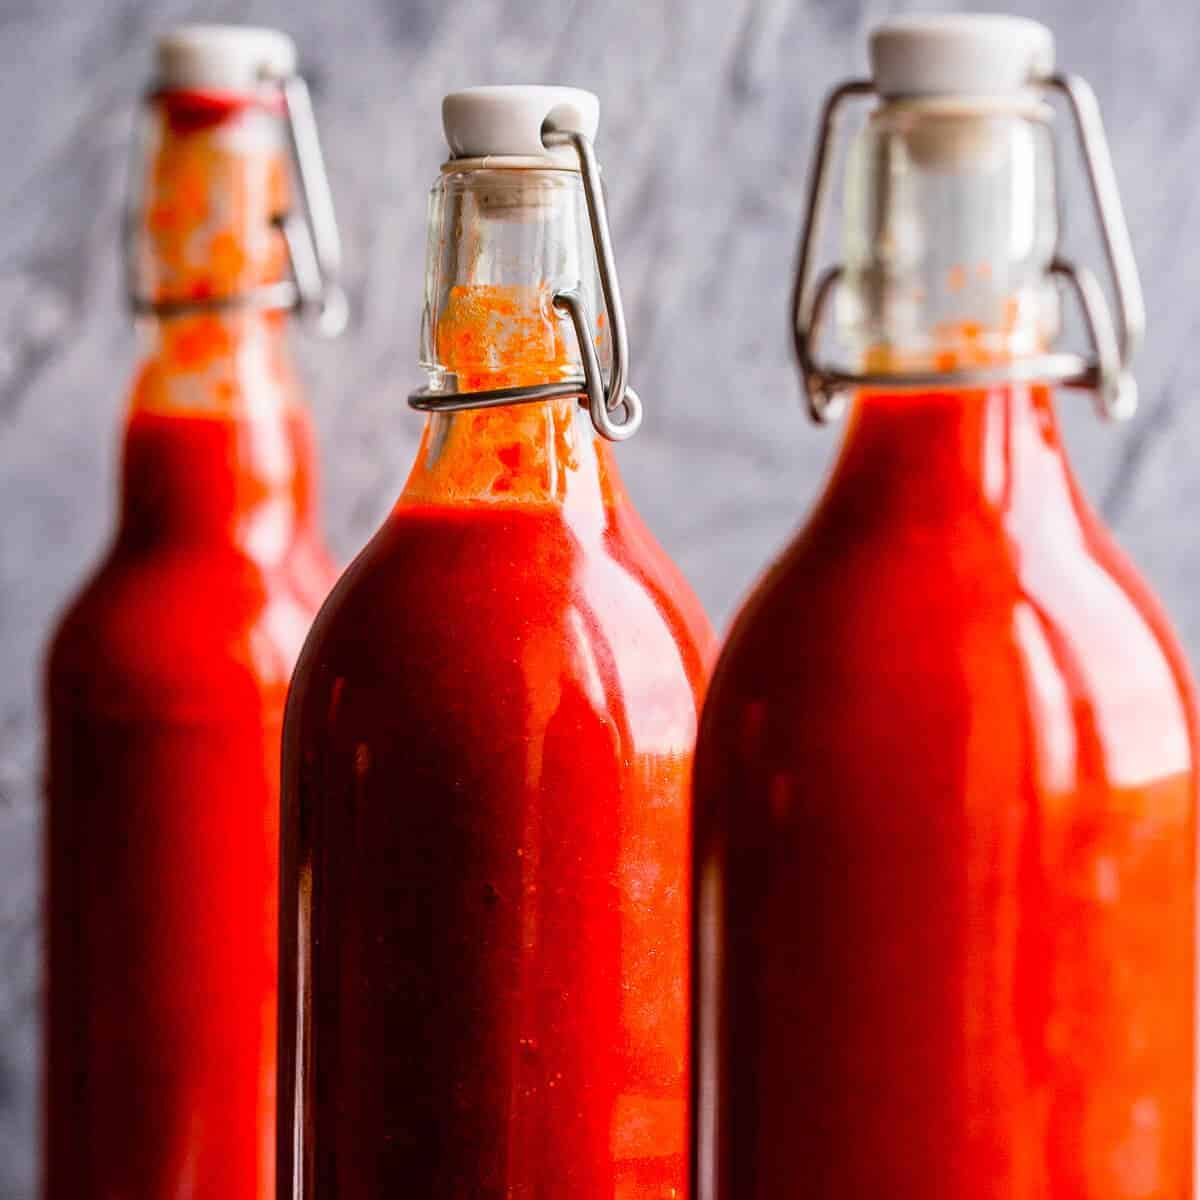 sriracha hot sauce in swing top bottles on grey background.